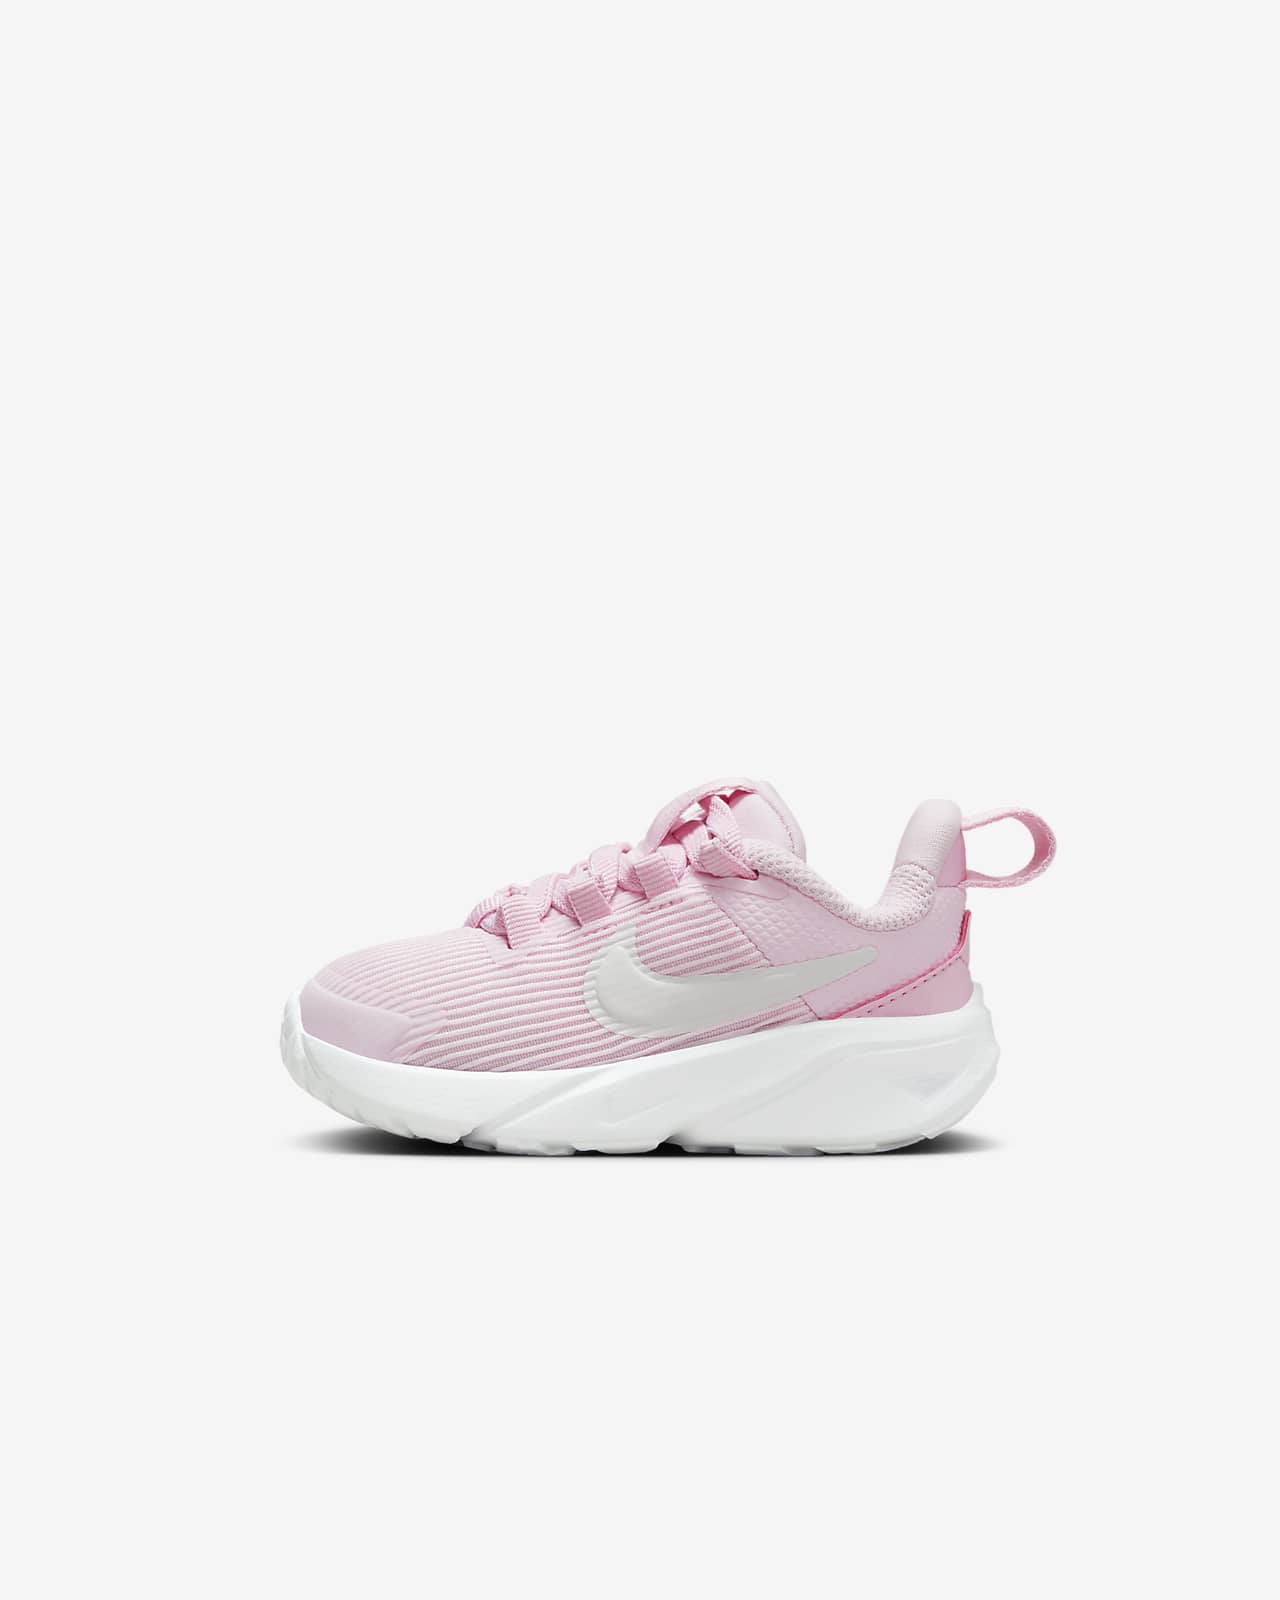 Star Baby/Toddler Shoes. Nike Runner 4